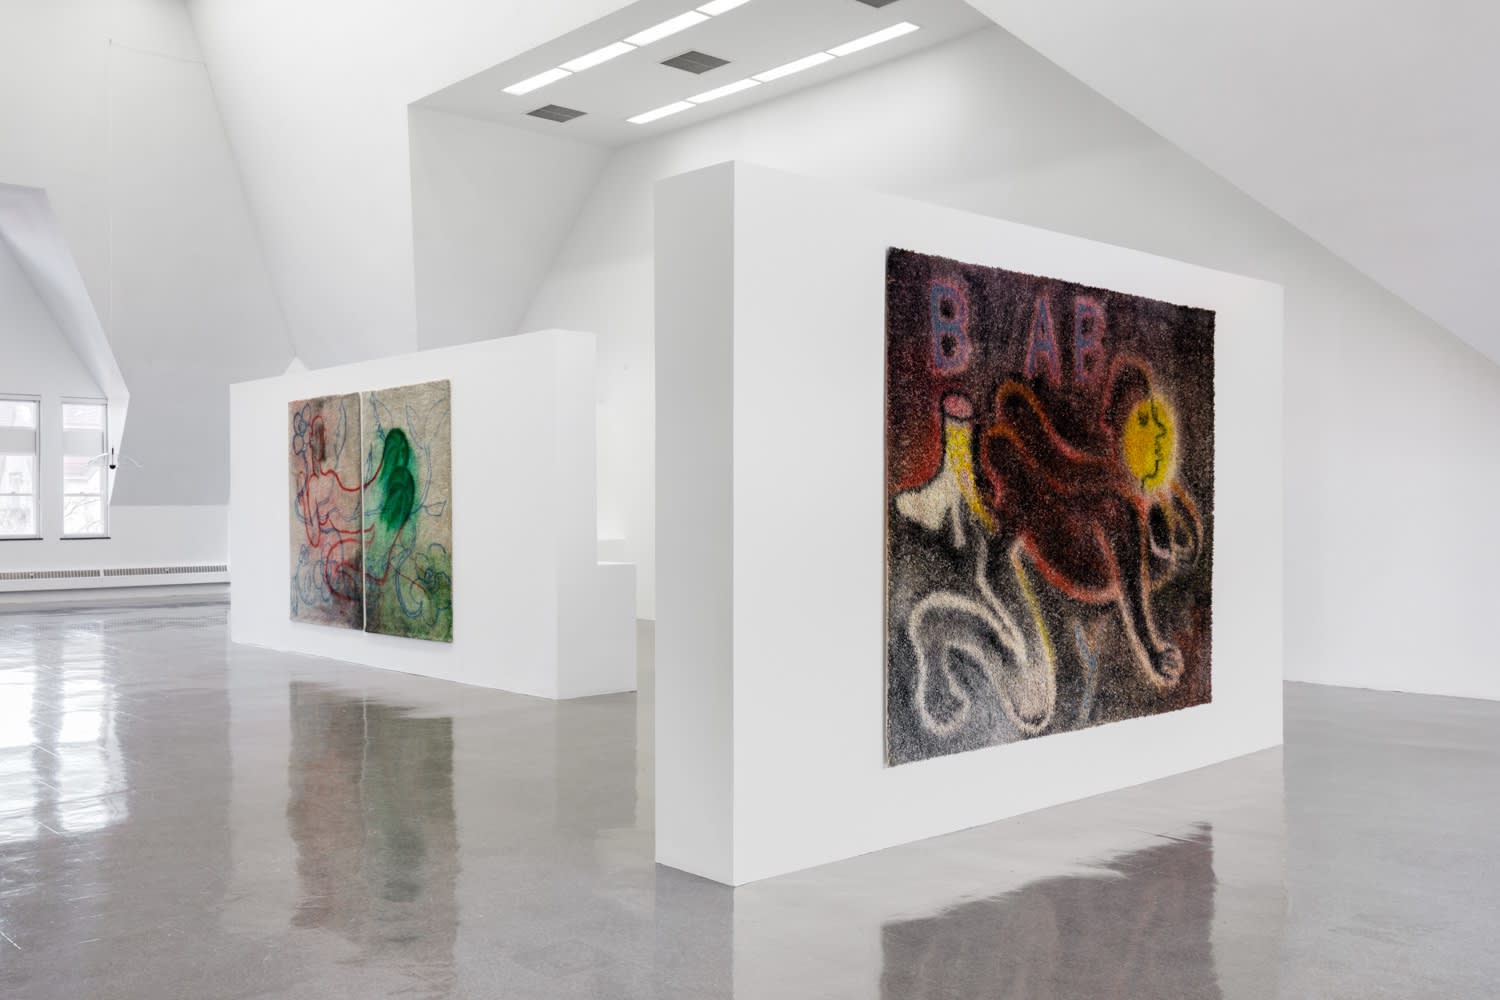 BROOK HSU installation view, Conspiracy theory, Et al. Gallery, San Francisco, 2019